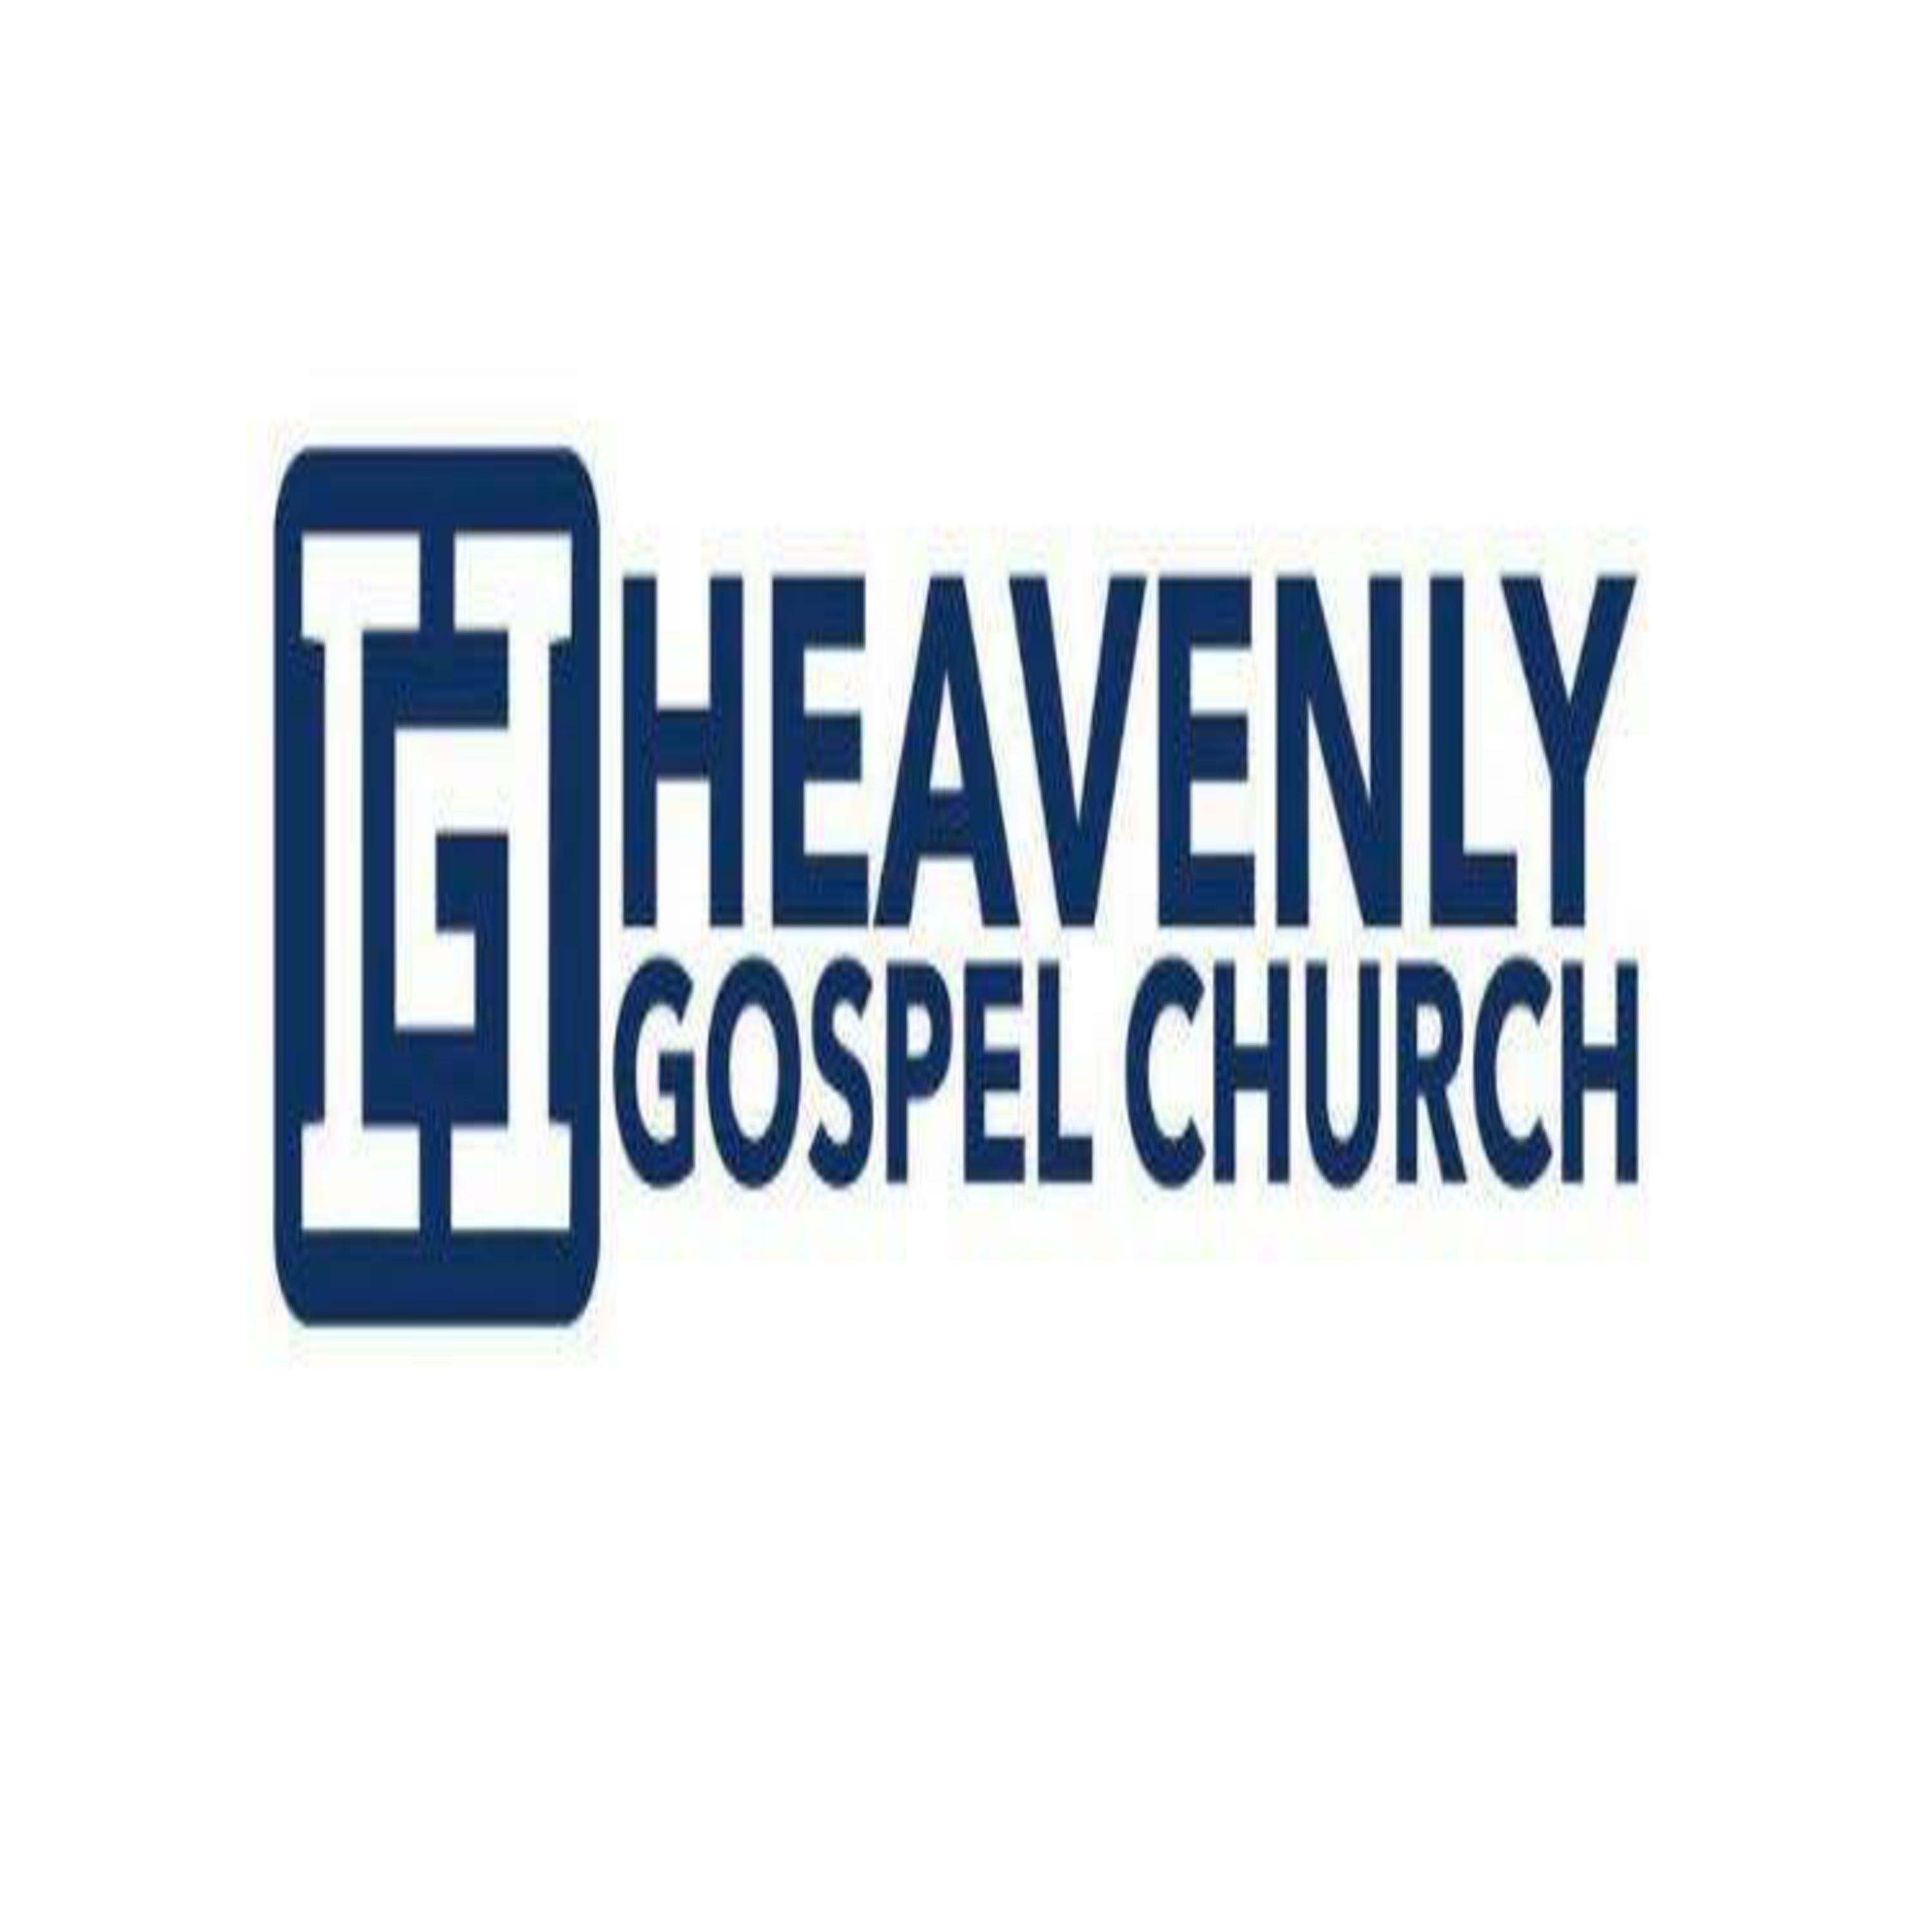 Heavenly Gospel Church 